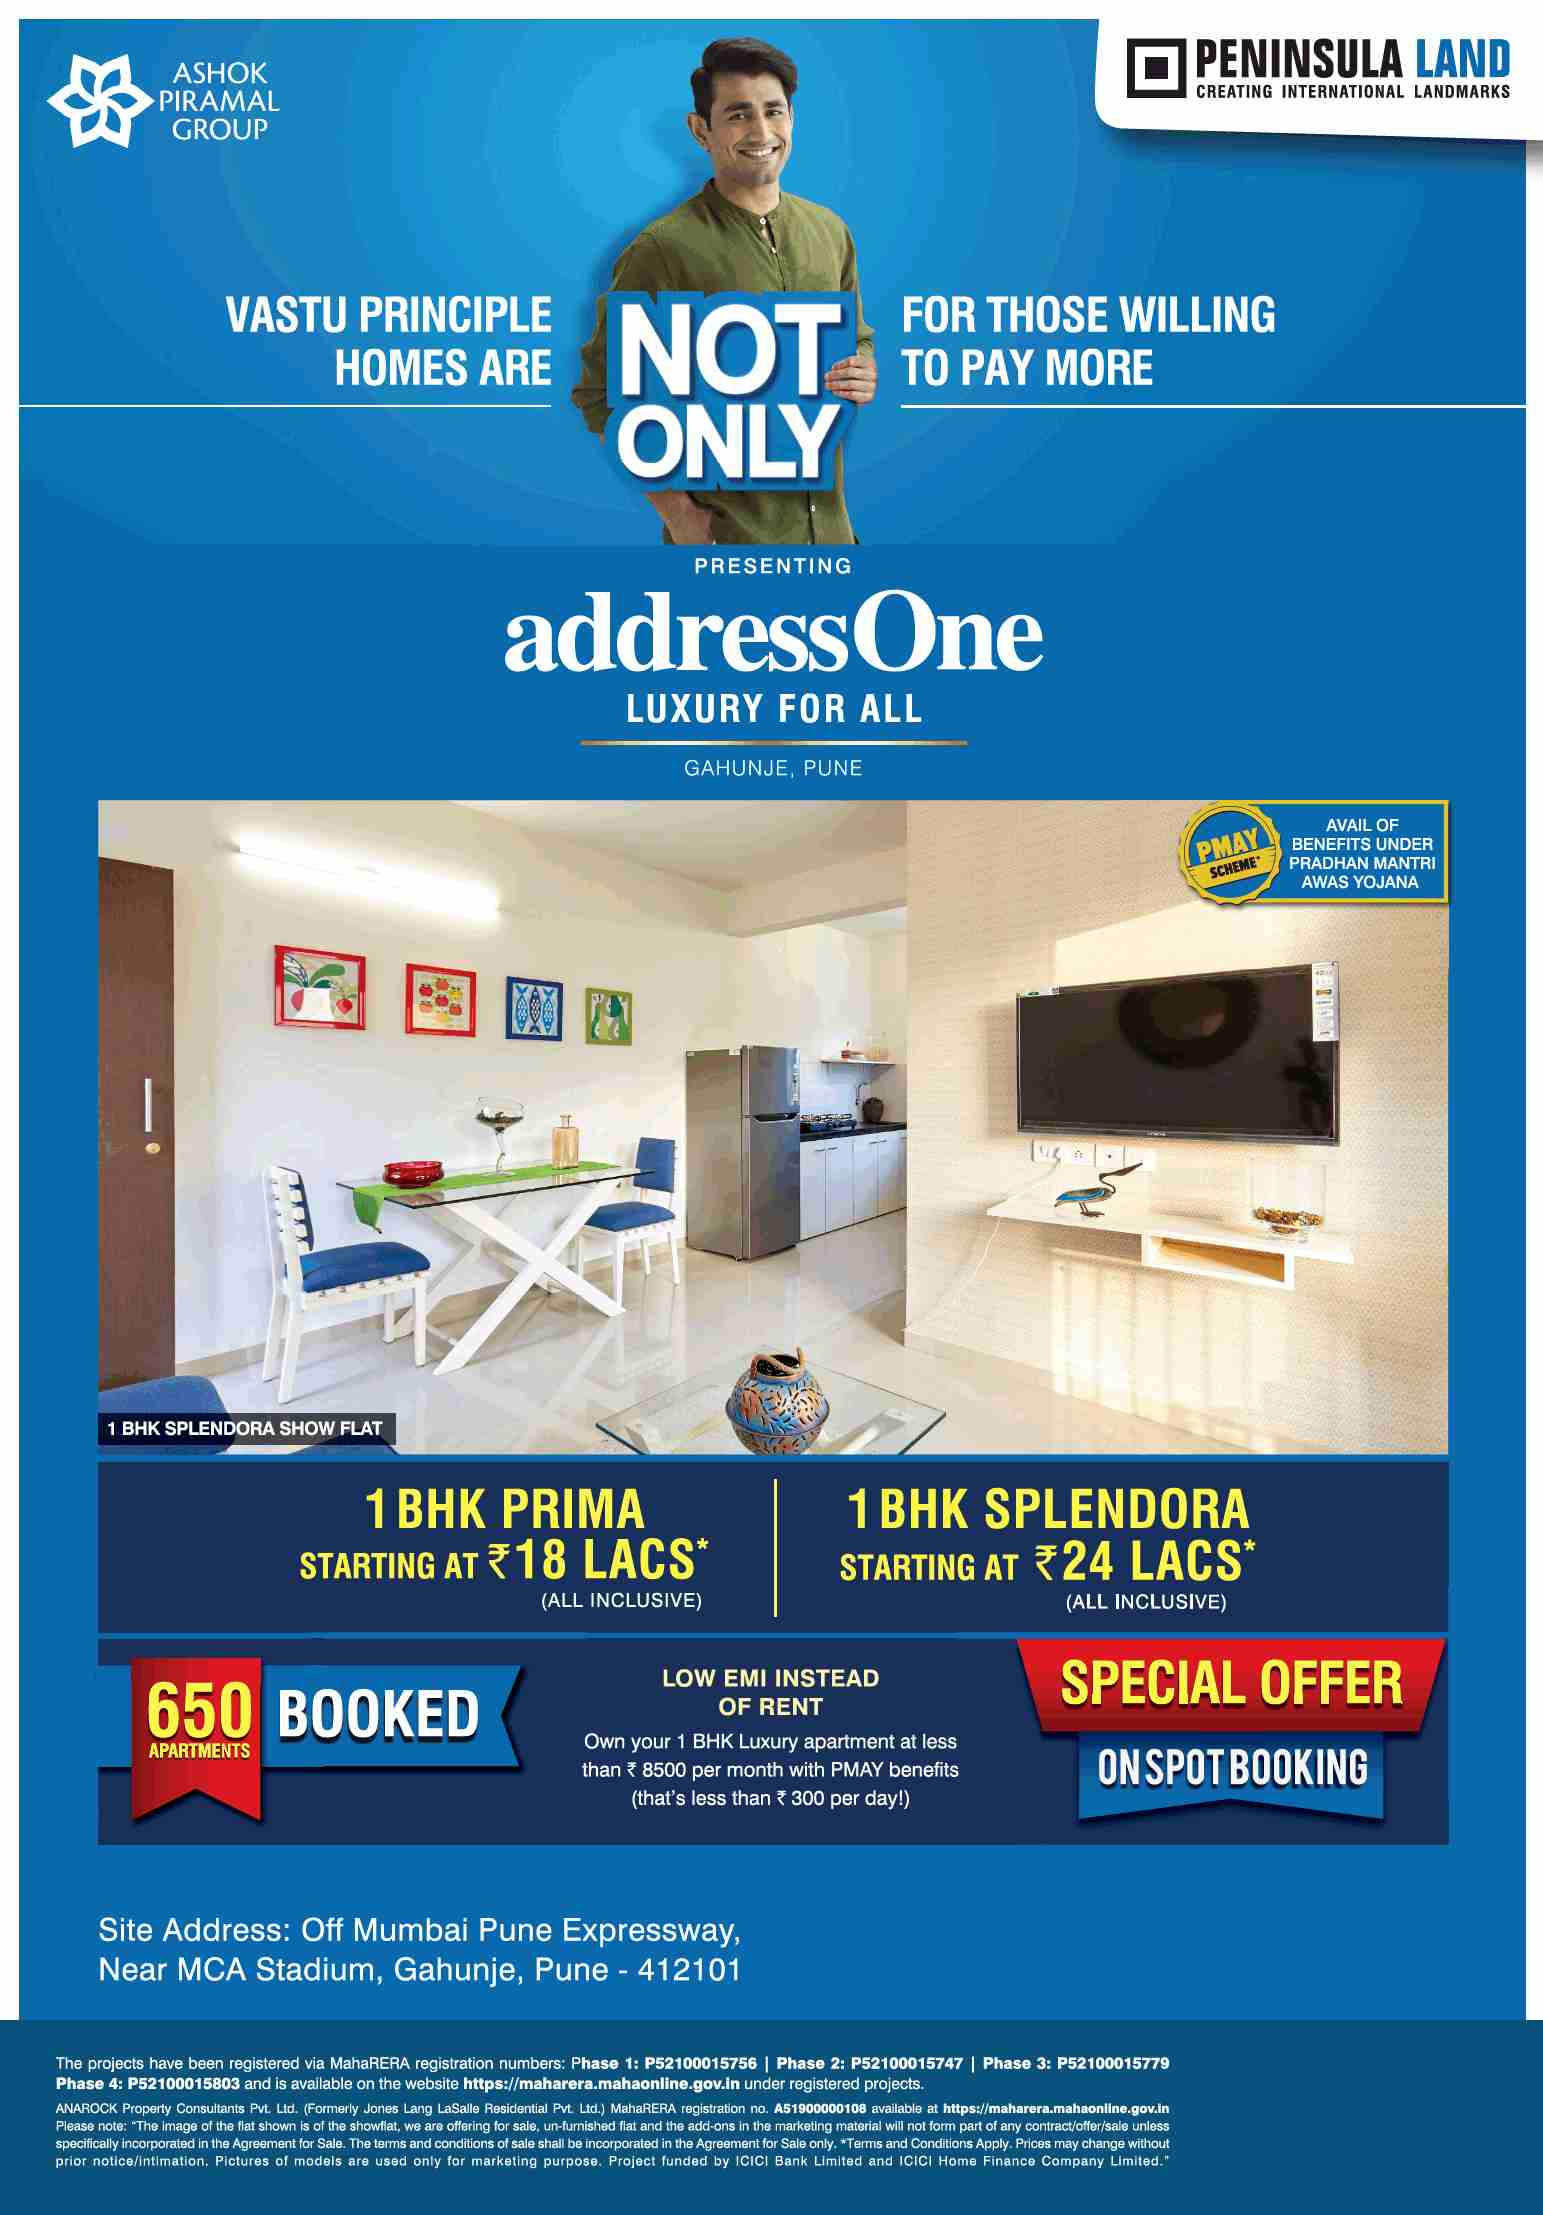 Avail Pradhan Mantri Awas Yojana benefits at Peninsula Address One in Pune Update